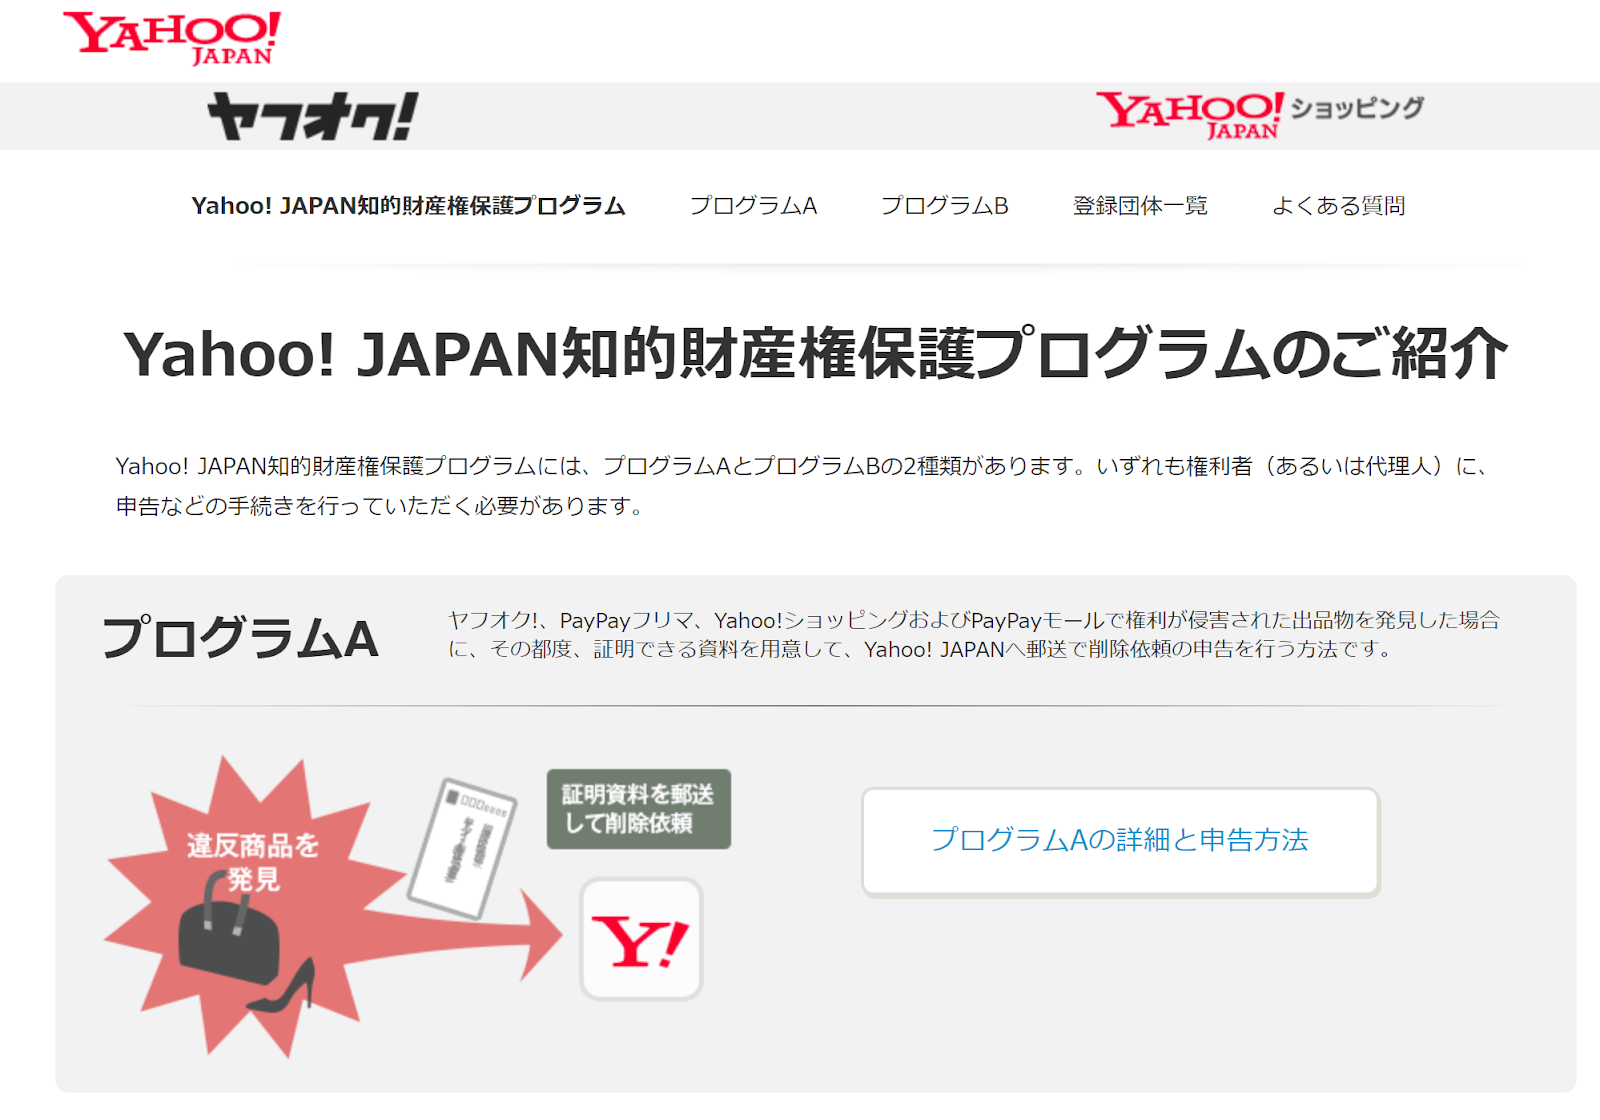 Yahoo! JAPAN知的財産権保護プログラムのご紹介